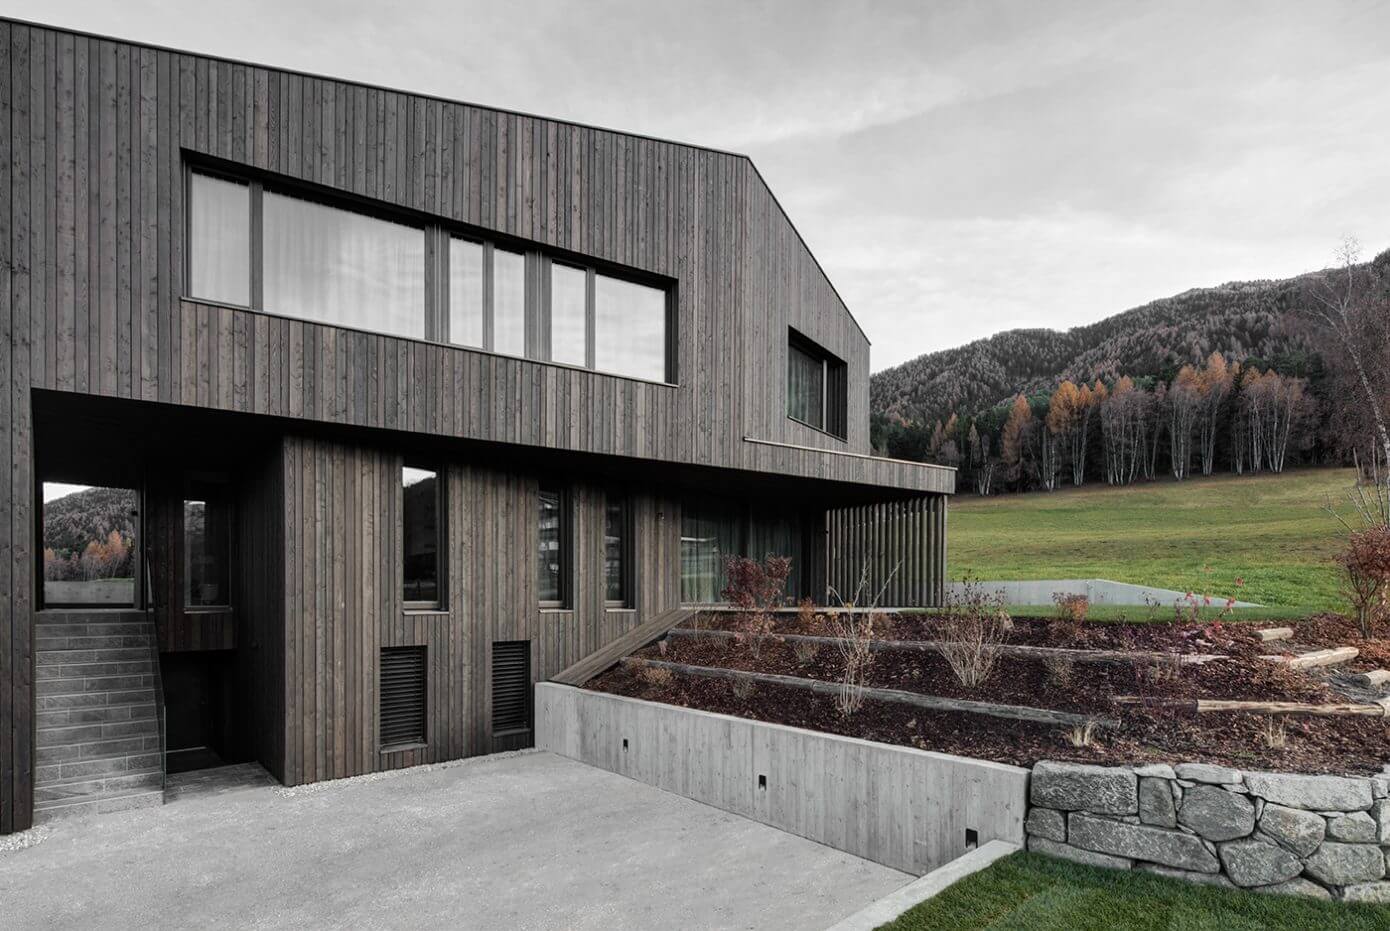 Casa M. by Comfort_Architecten